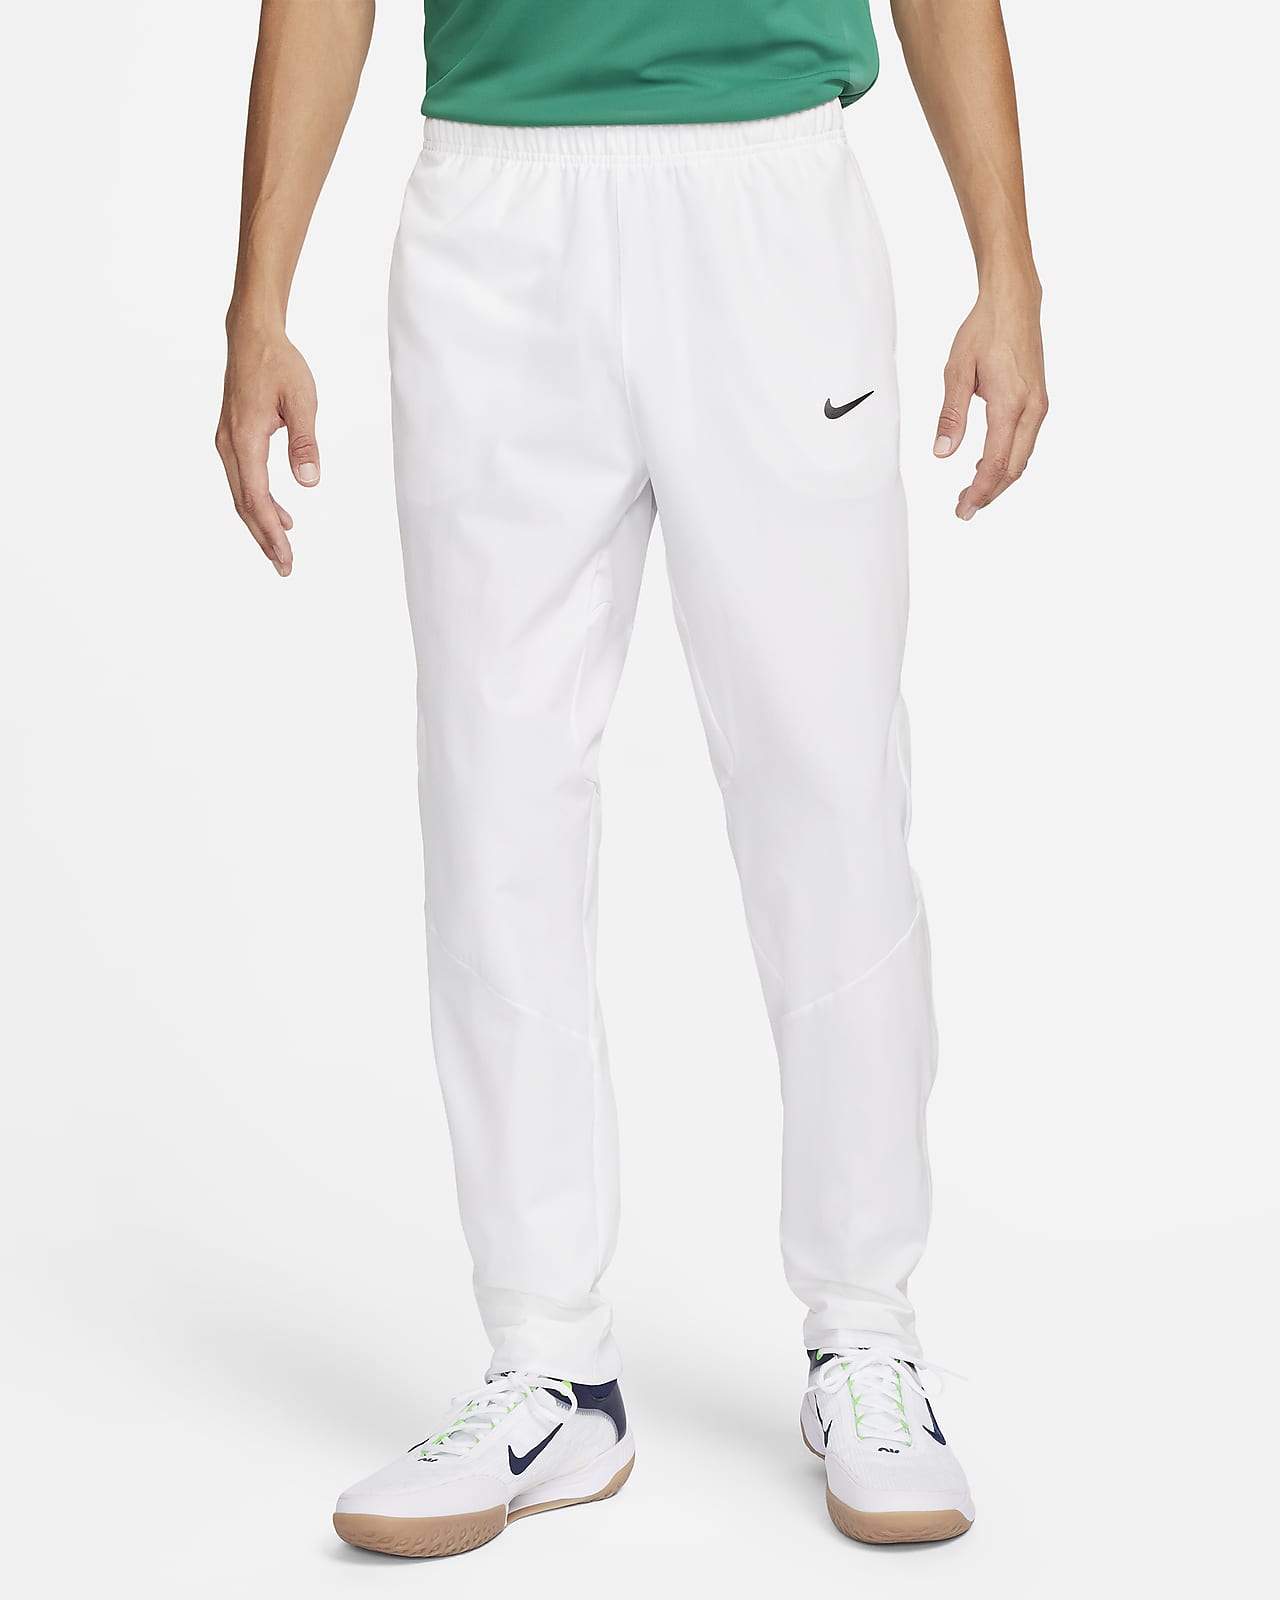 Nike Mens Tennis Trousers NikeCourt small sports pants active sportswear new